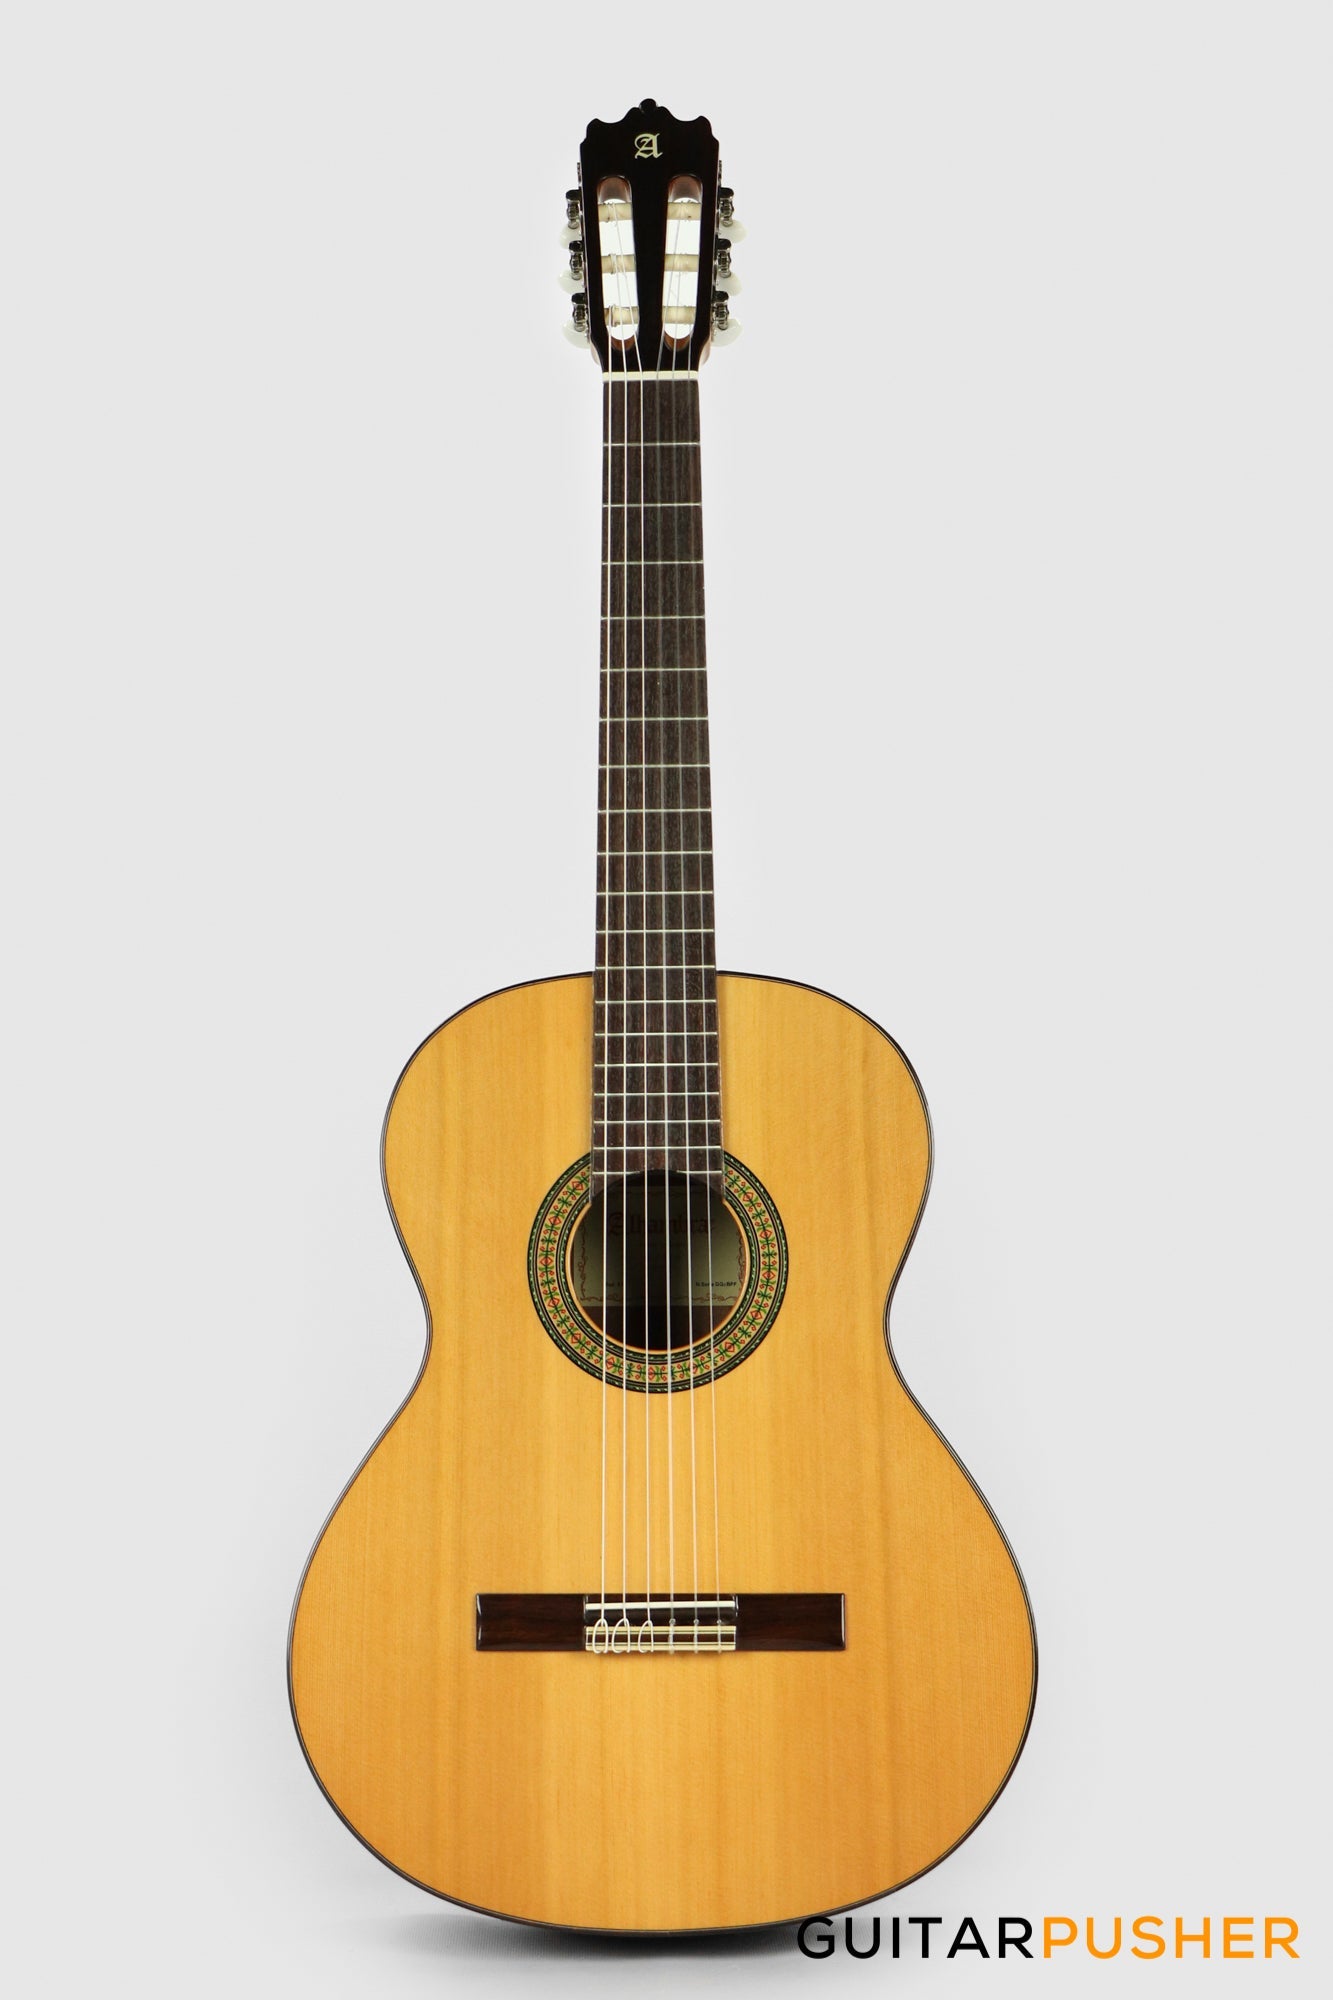 Alhambra Student Series 3 C Solid Red Cedar Top/Mahogany 4/4 Classical Guitar (Natural)